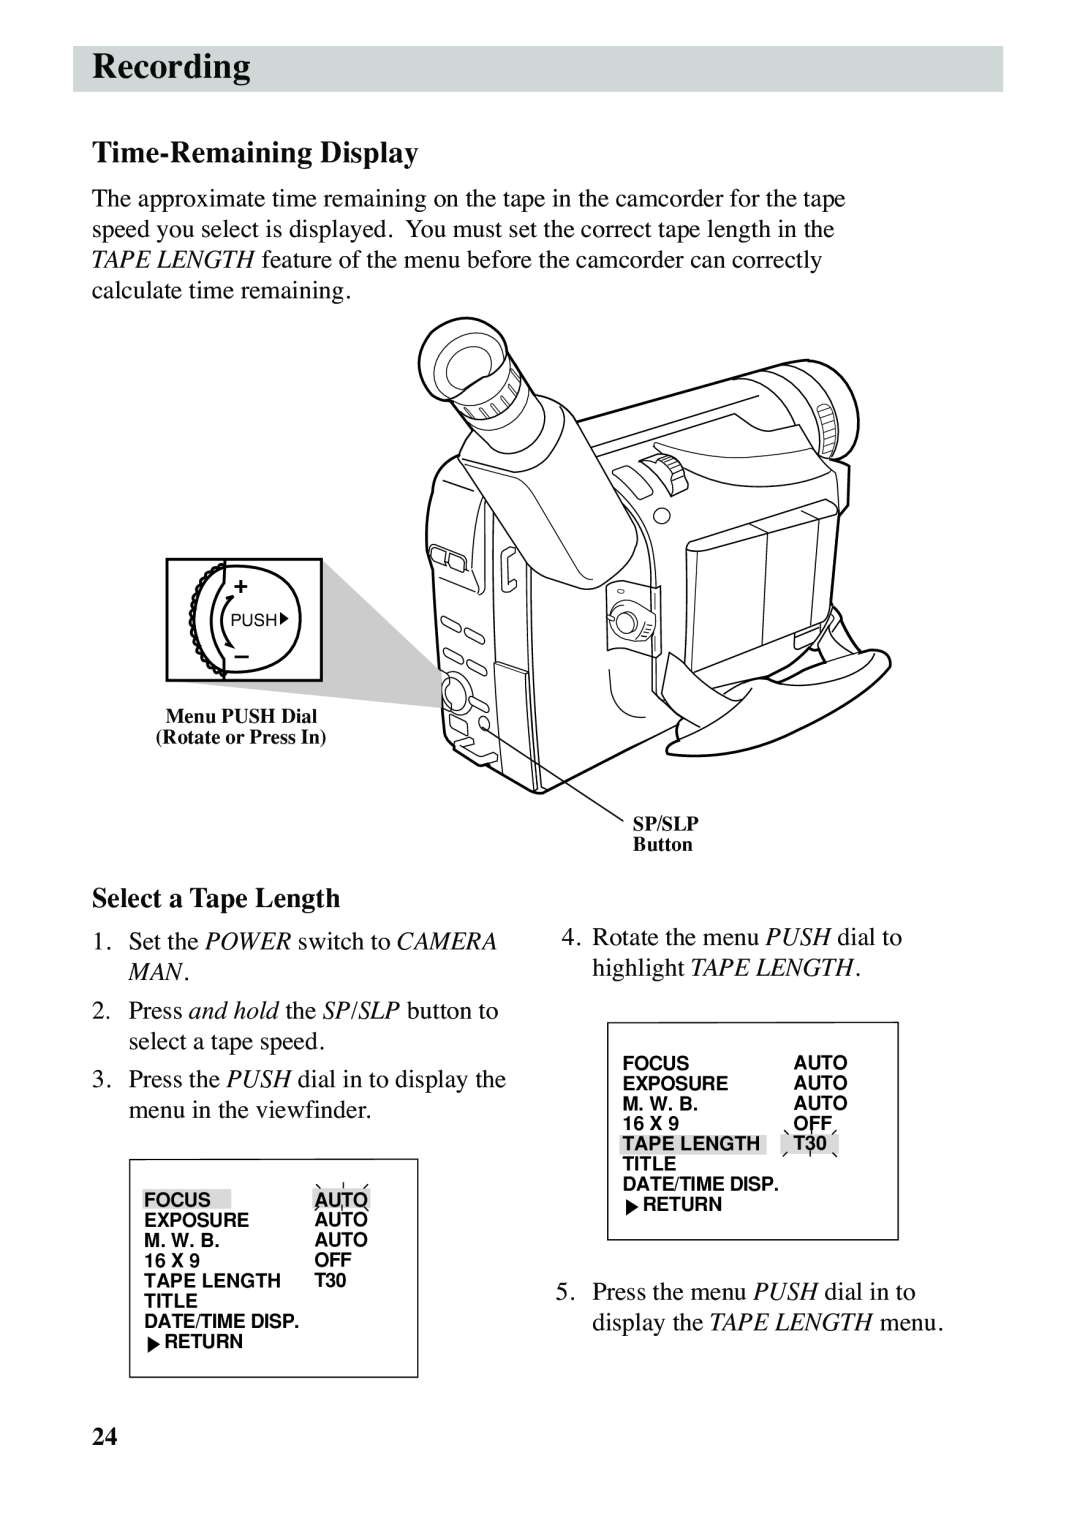 RCA CC6263 manual Recording, Time-Remaining Display, Select a Tape Length 